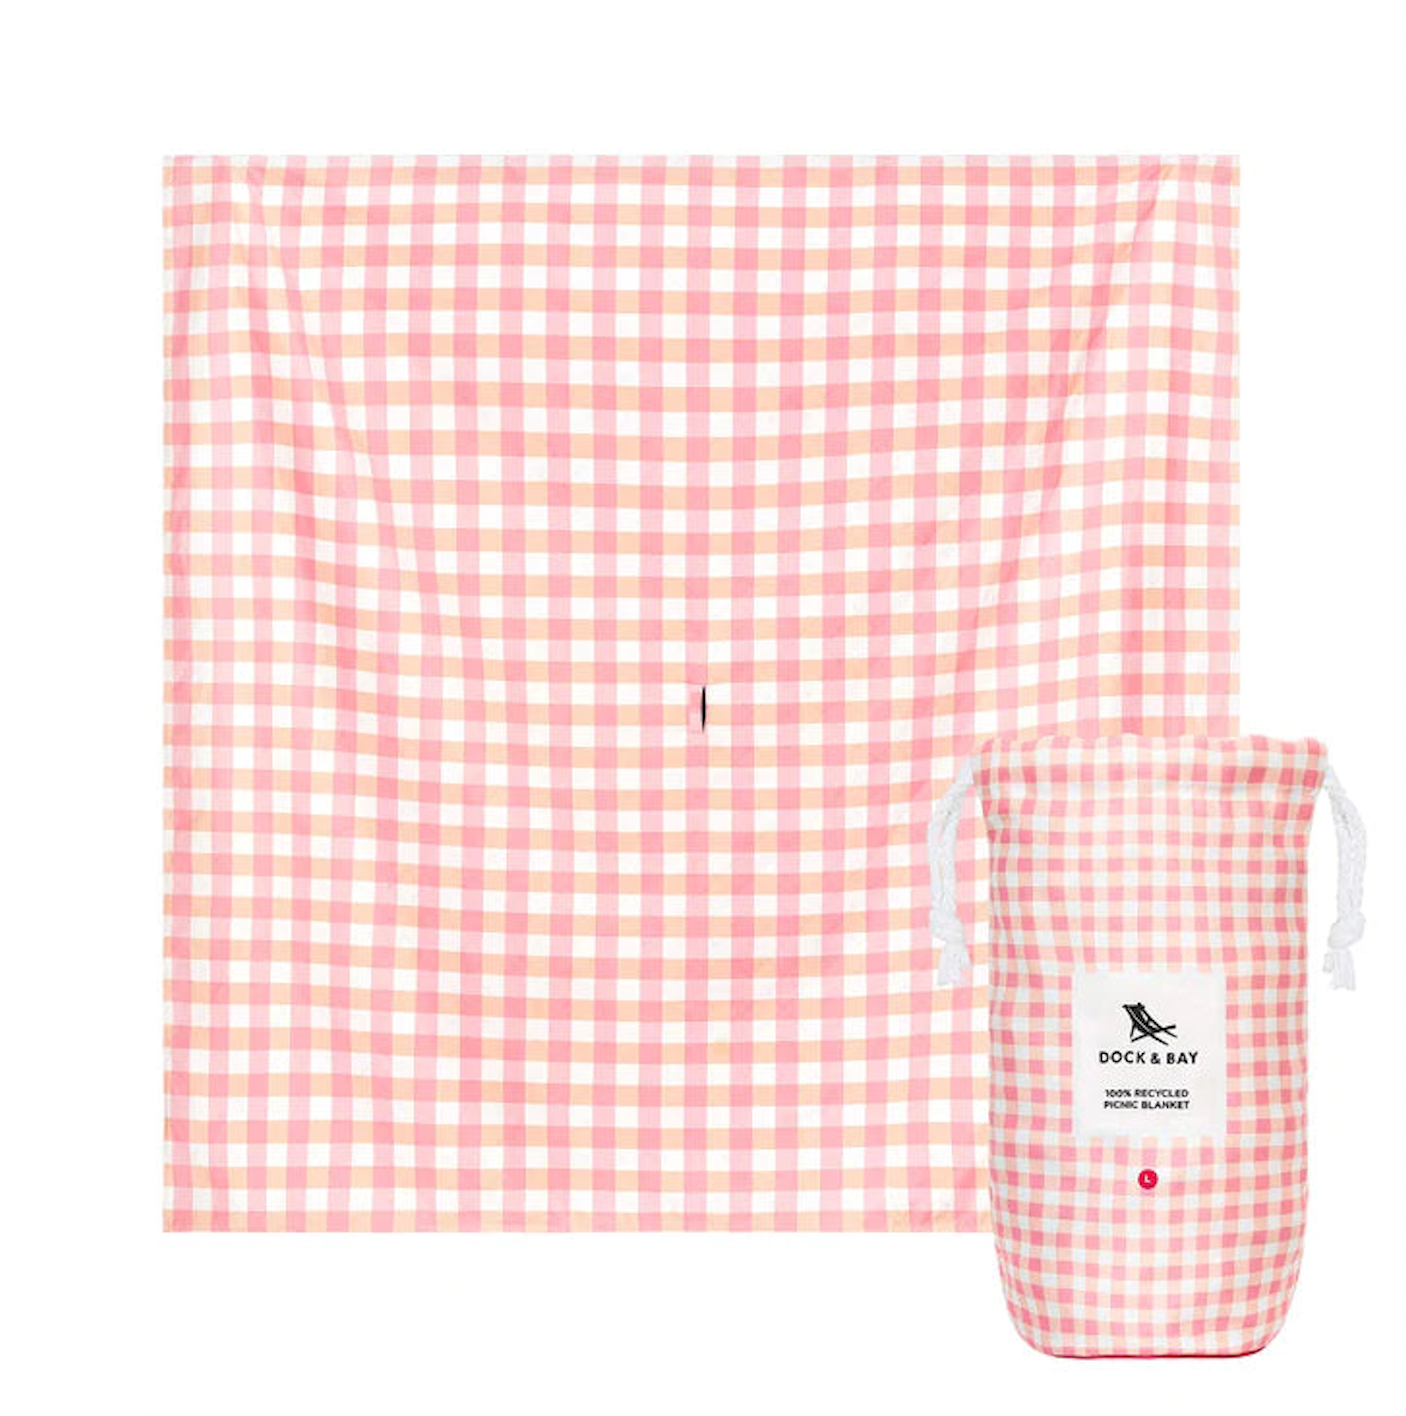 Dock & Bay Picnic Blanket - Strawberry & Cream